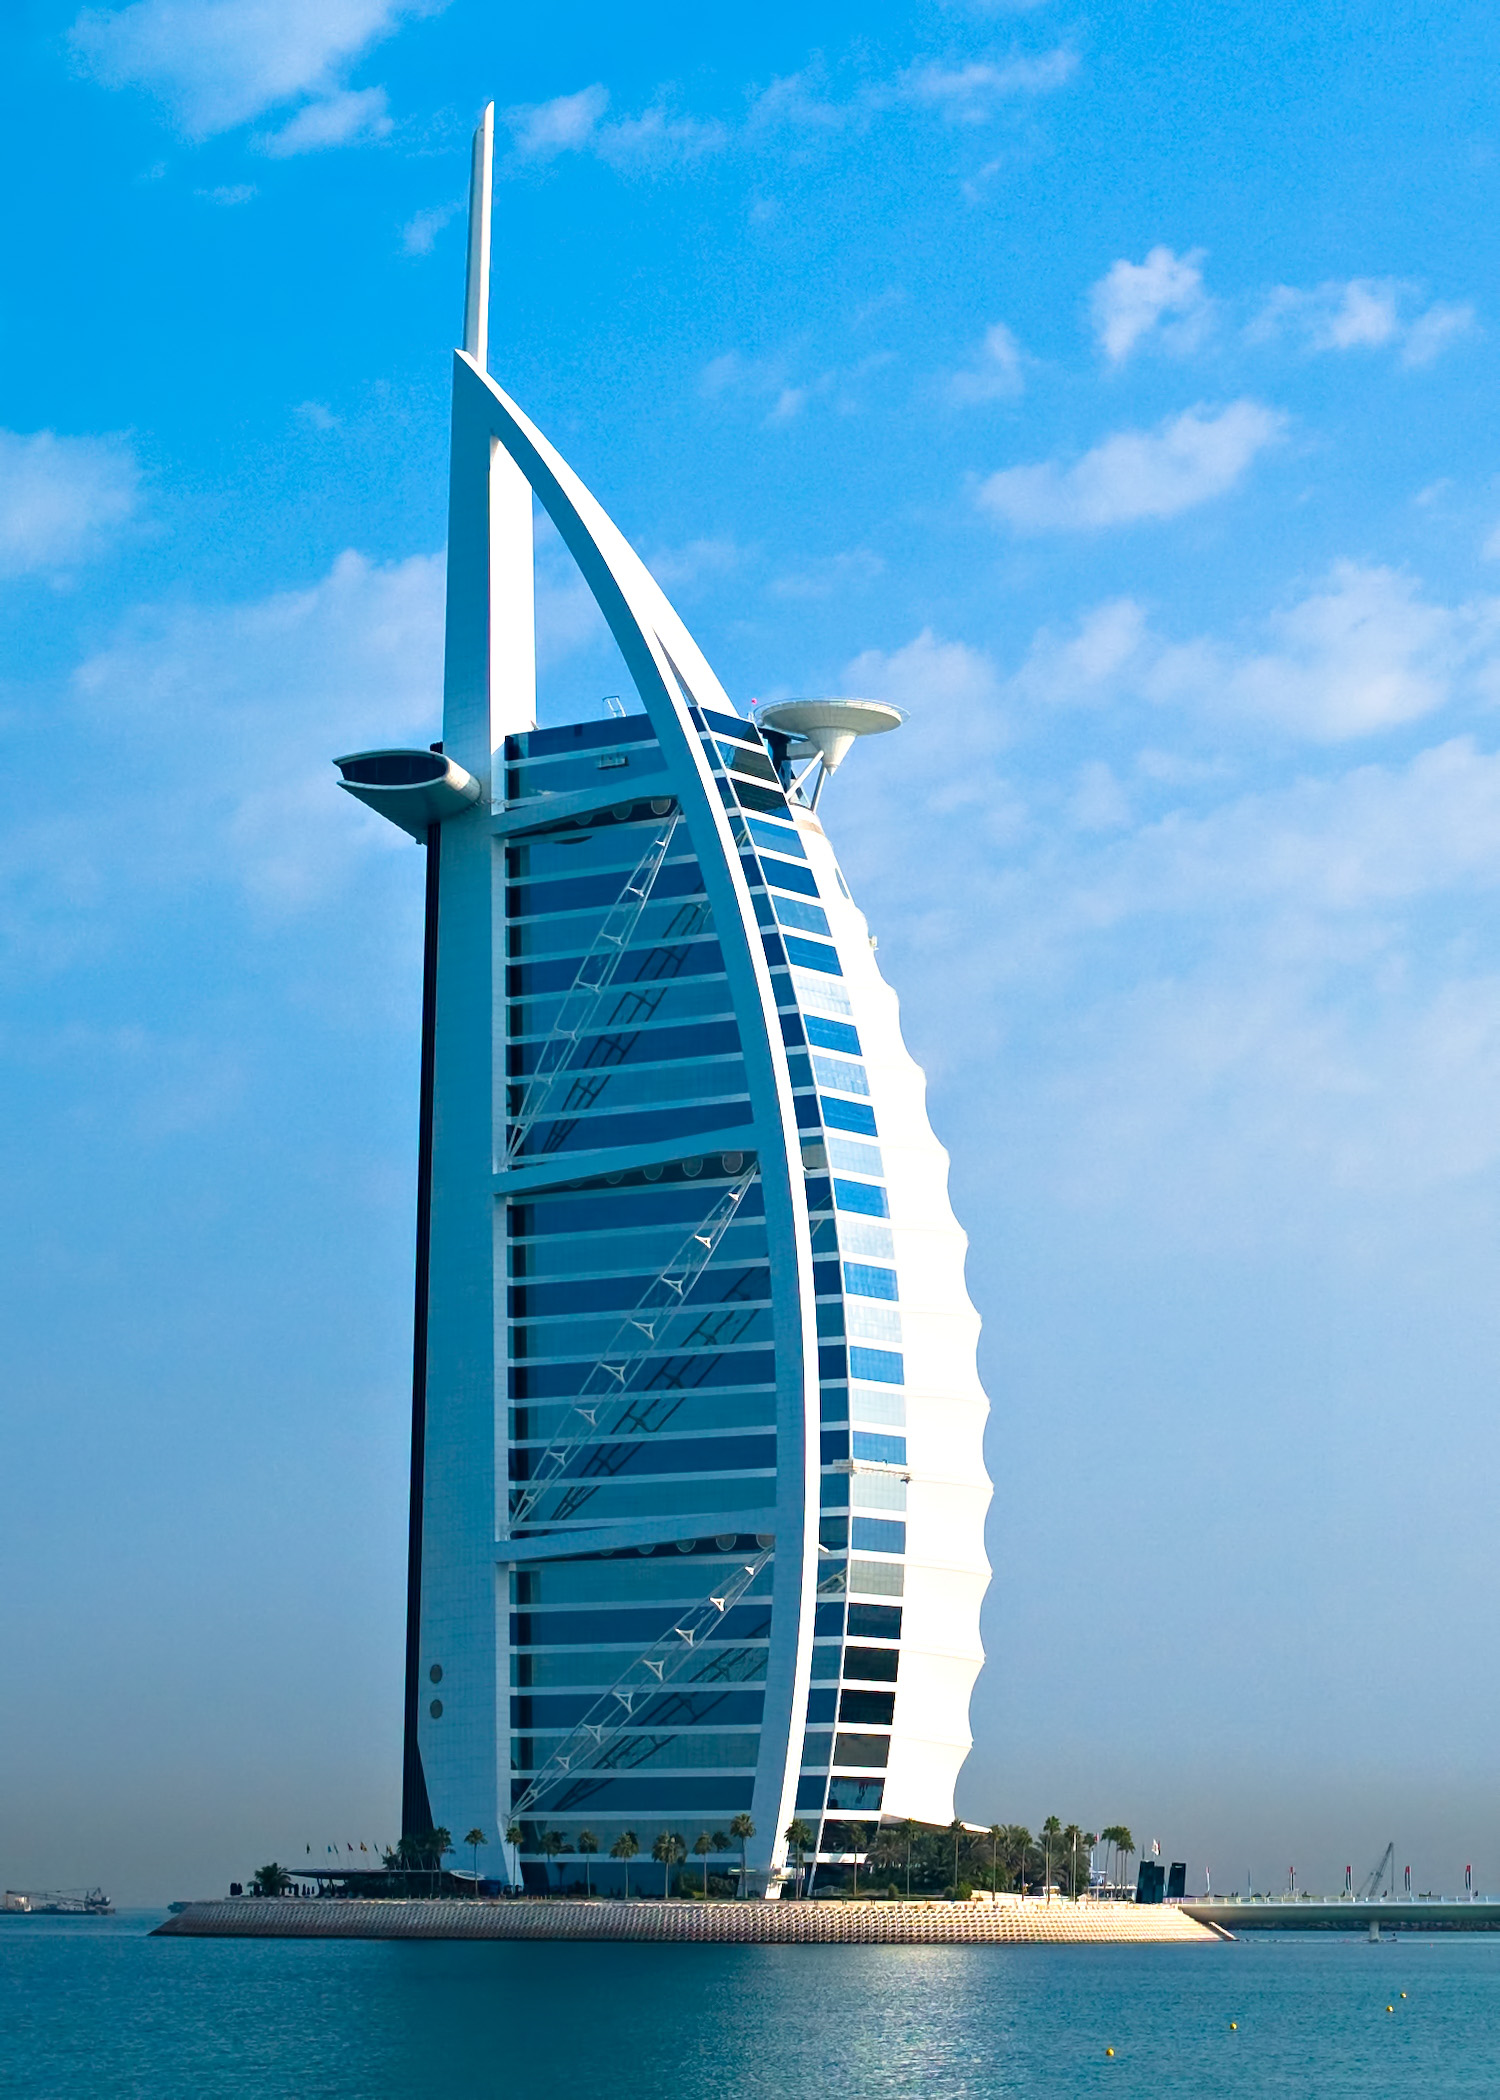 Burj Al Arab Jumeirah Hotel – Dubai, UAE – Tower View